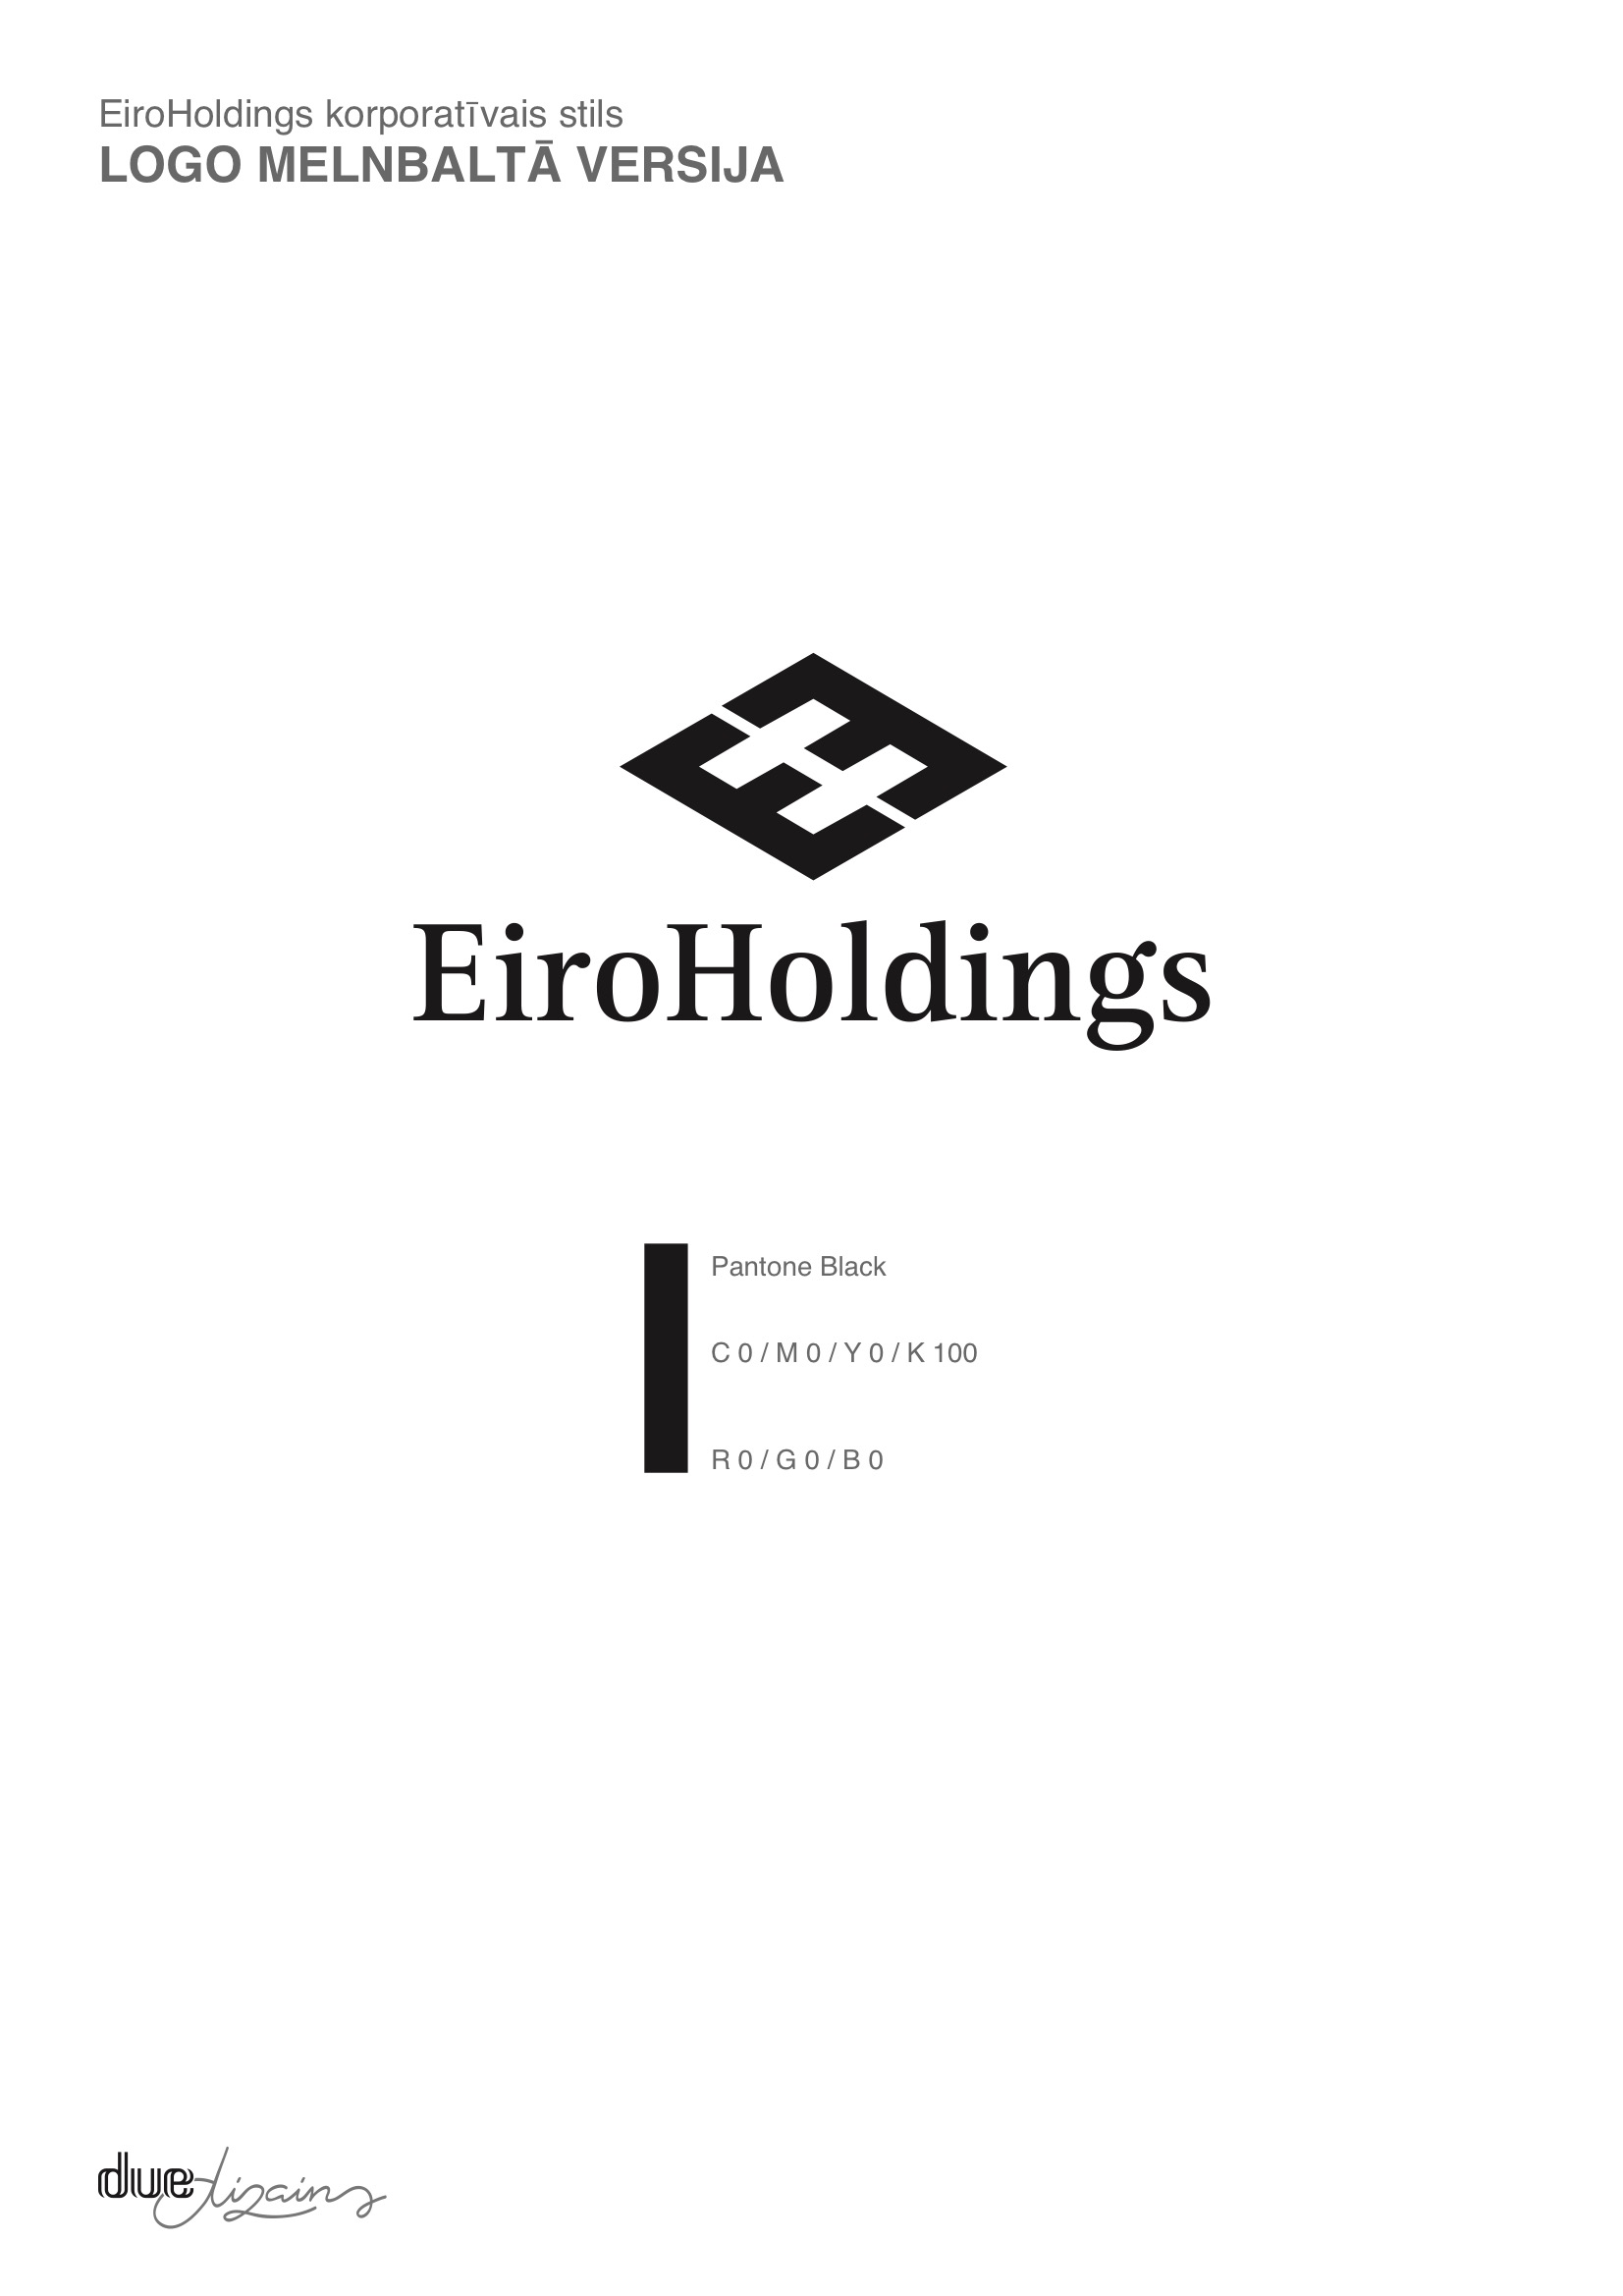 Eiroholdings_logo_guidelines 3